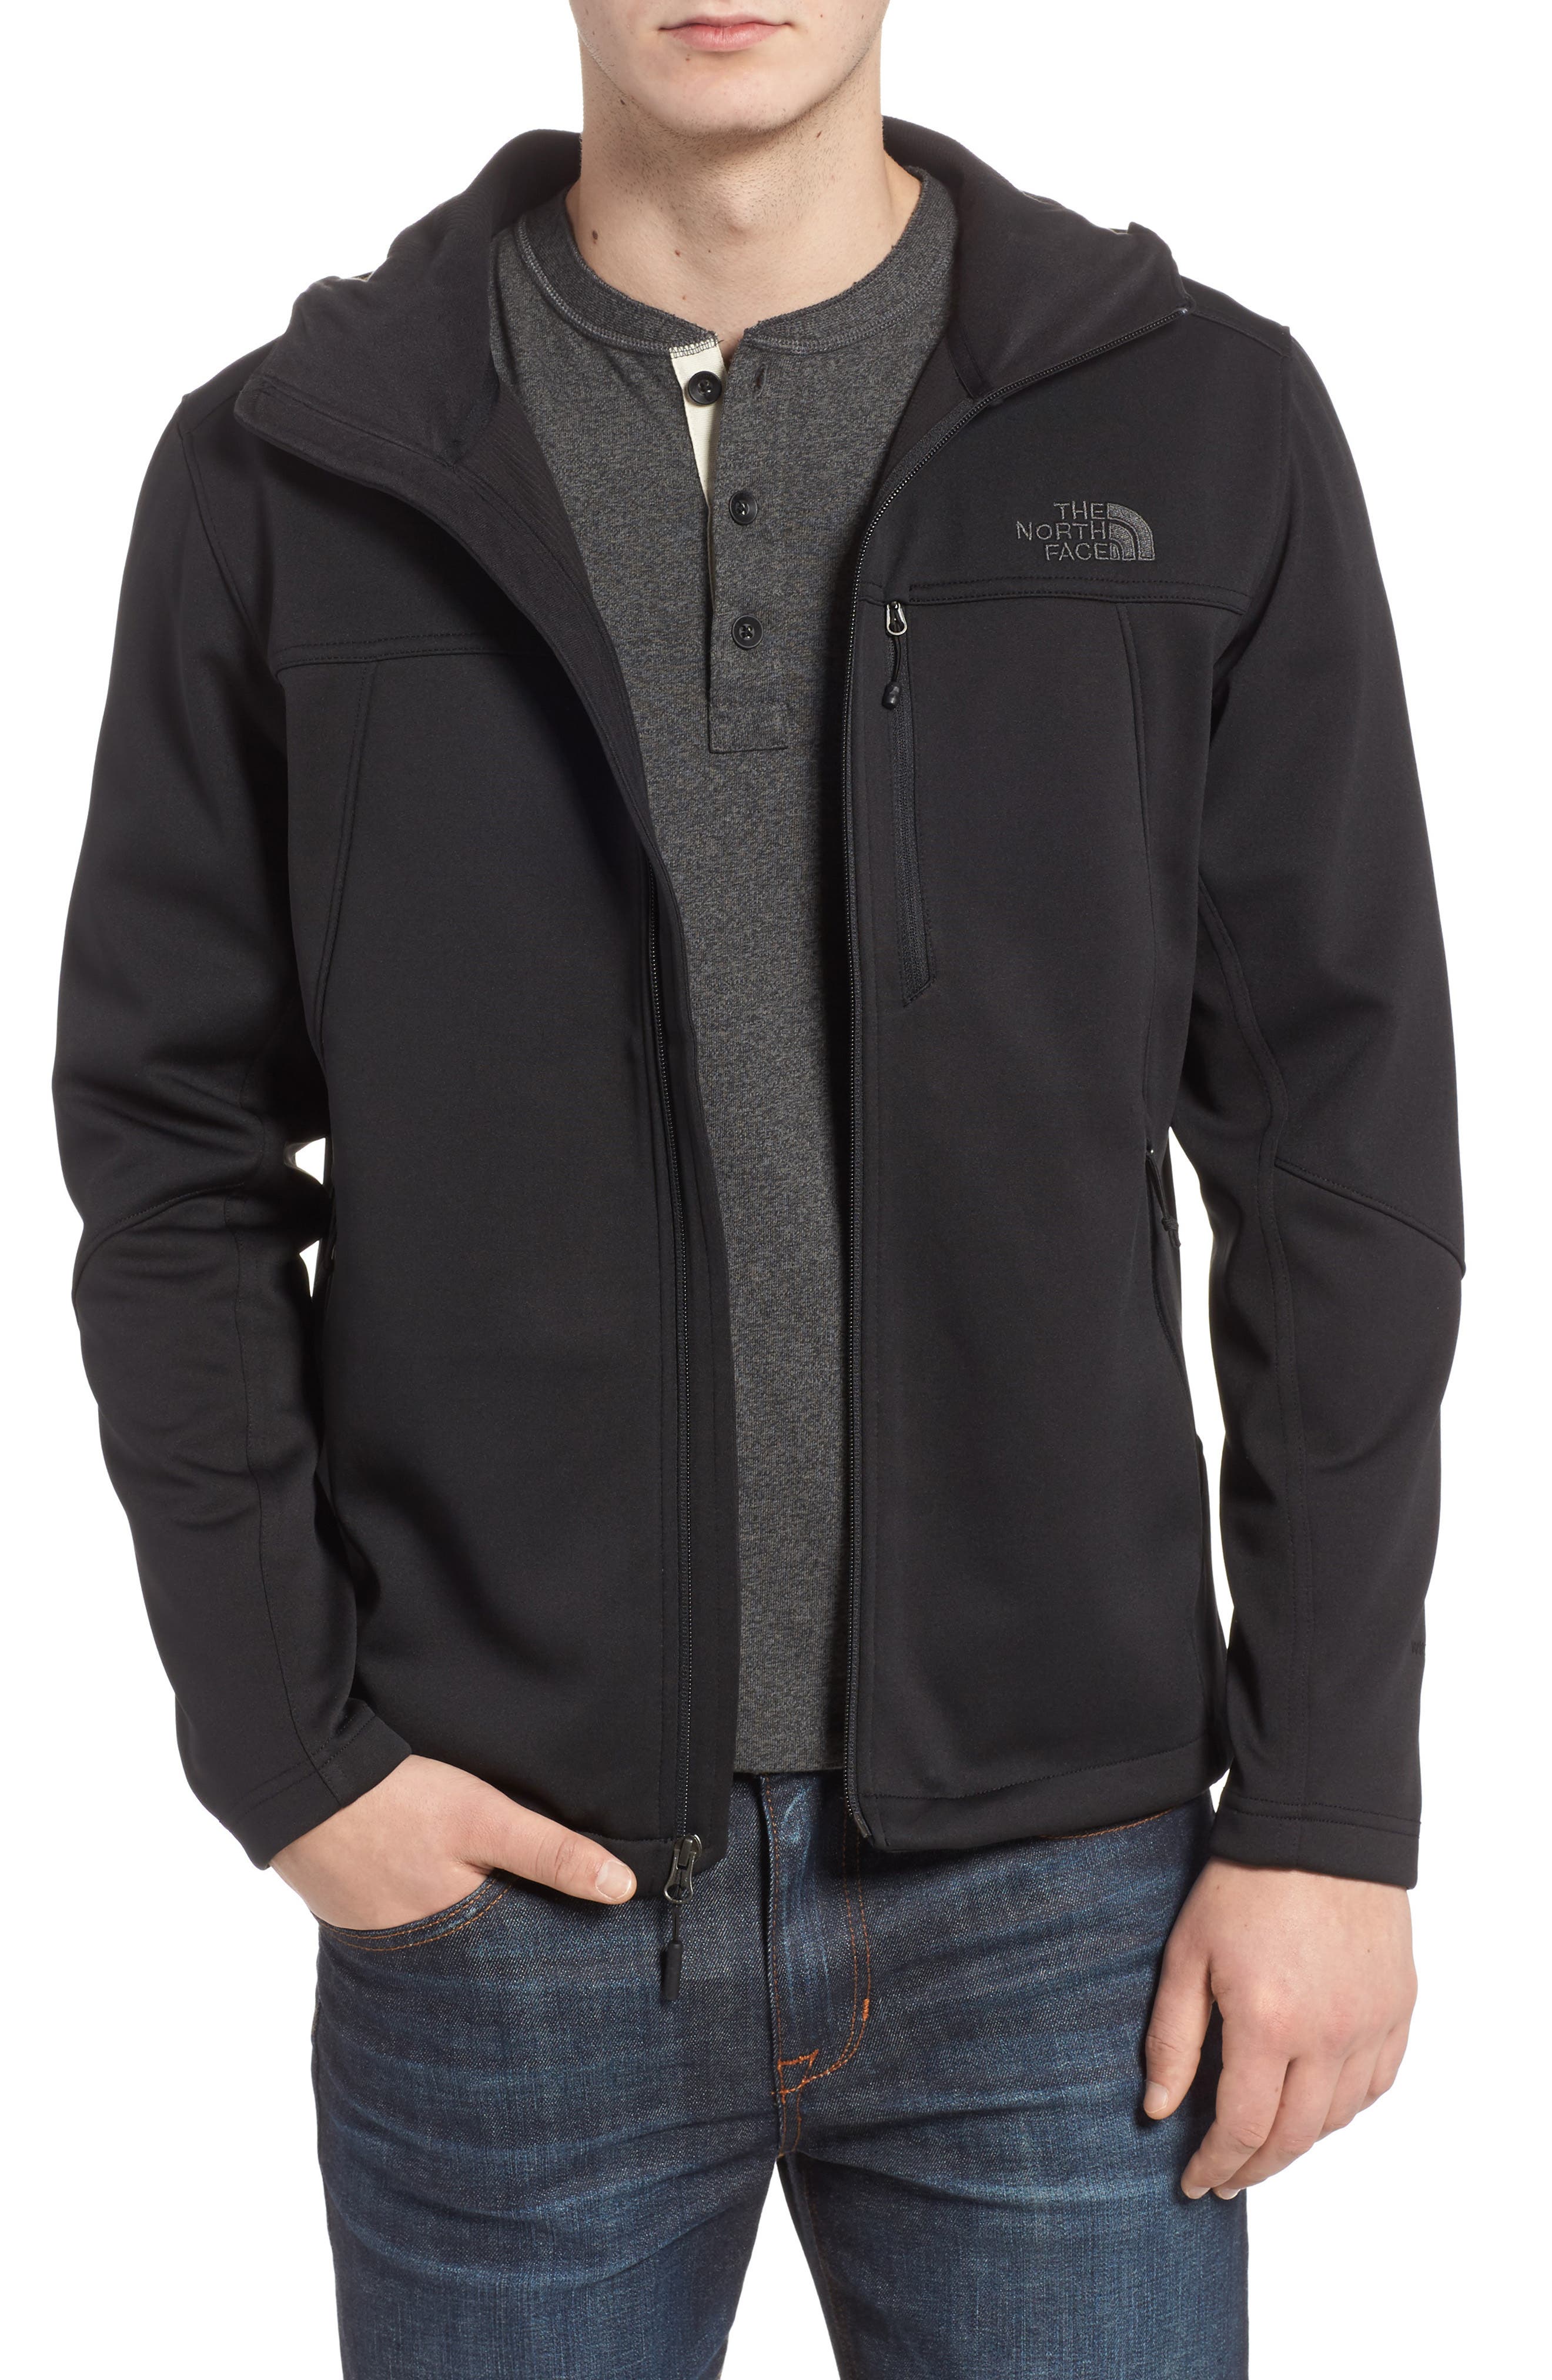 men's canyonwall hybrid jacket